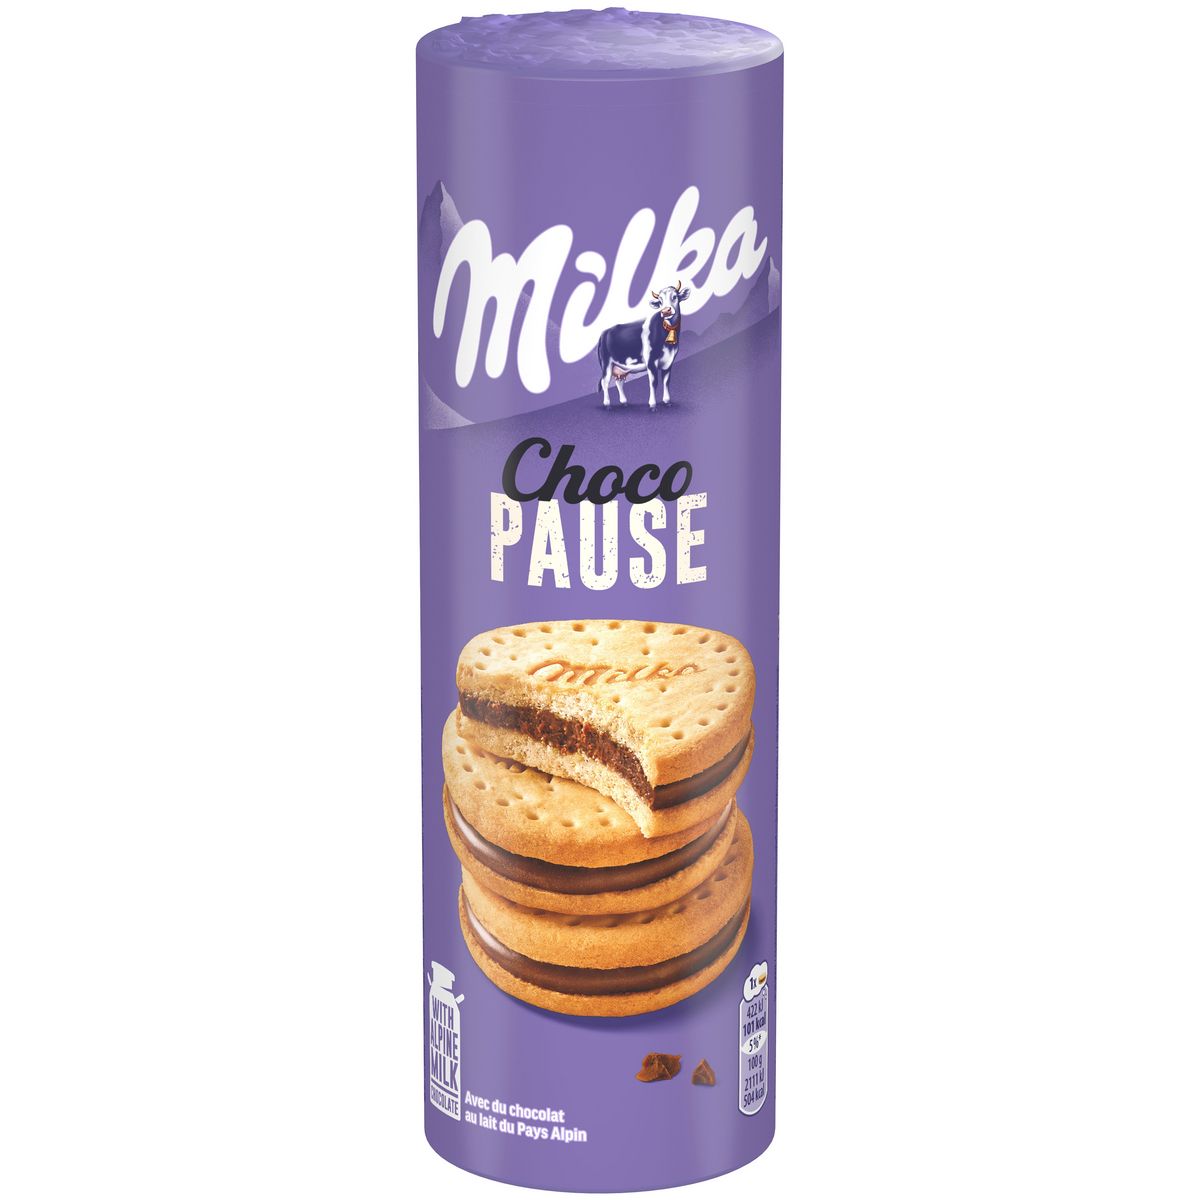 MILKA Choco pause, biscuits fourrés au chocolat 13 biscuits 260g